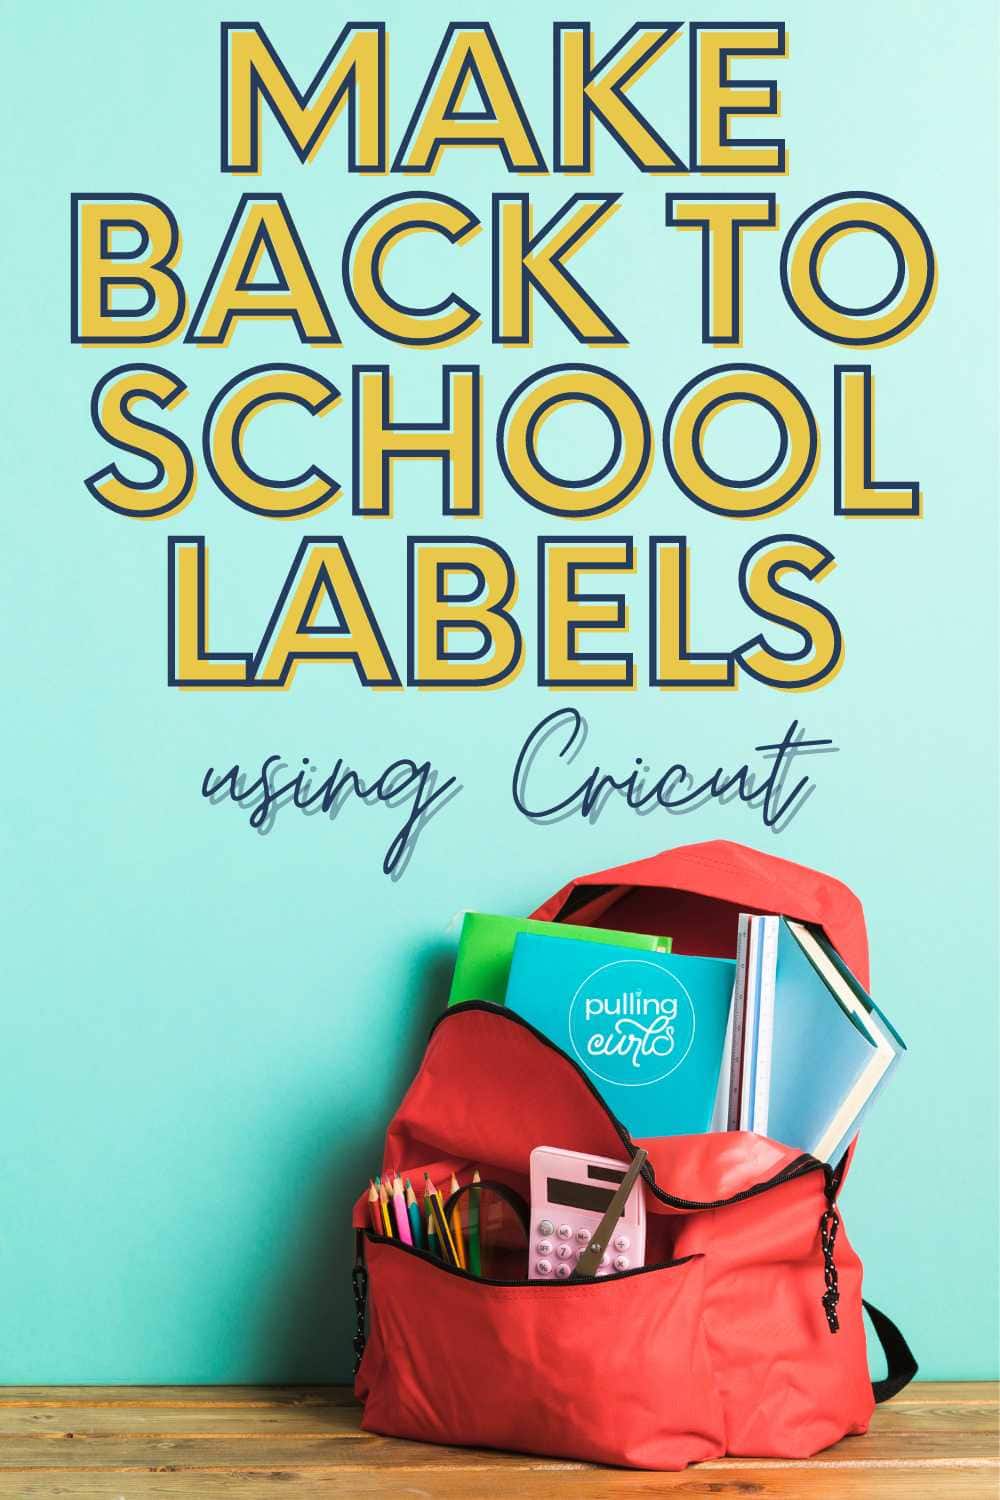 Personalize Back to School Supplies with Cricut Joy via @pullingcurls